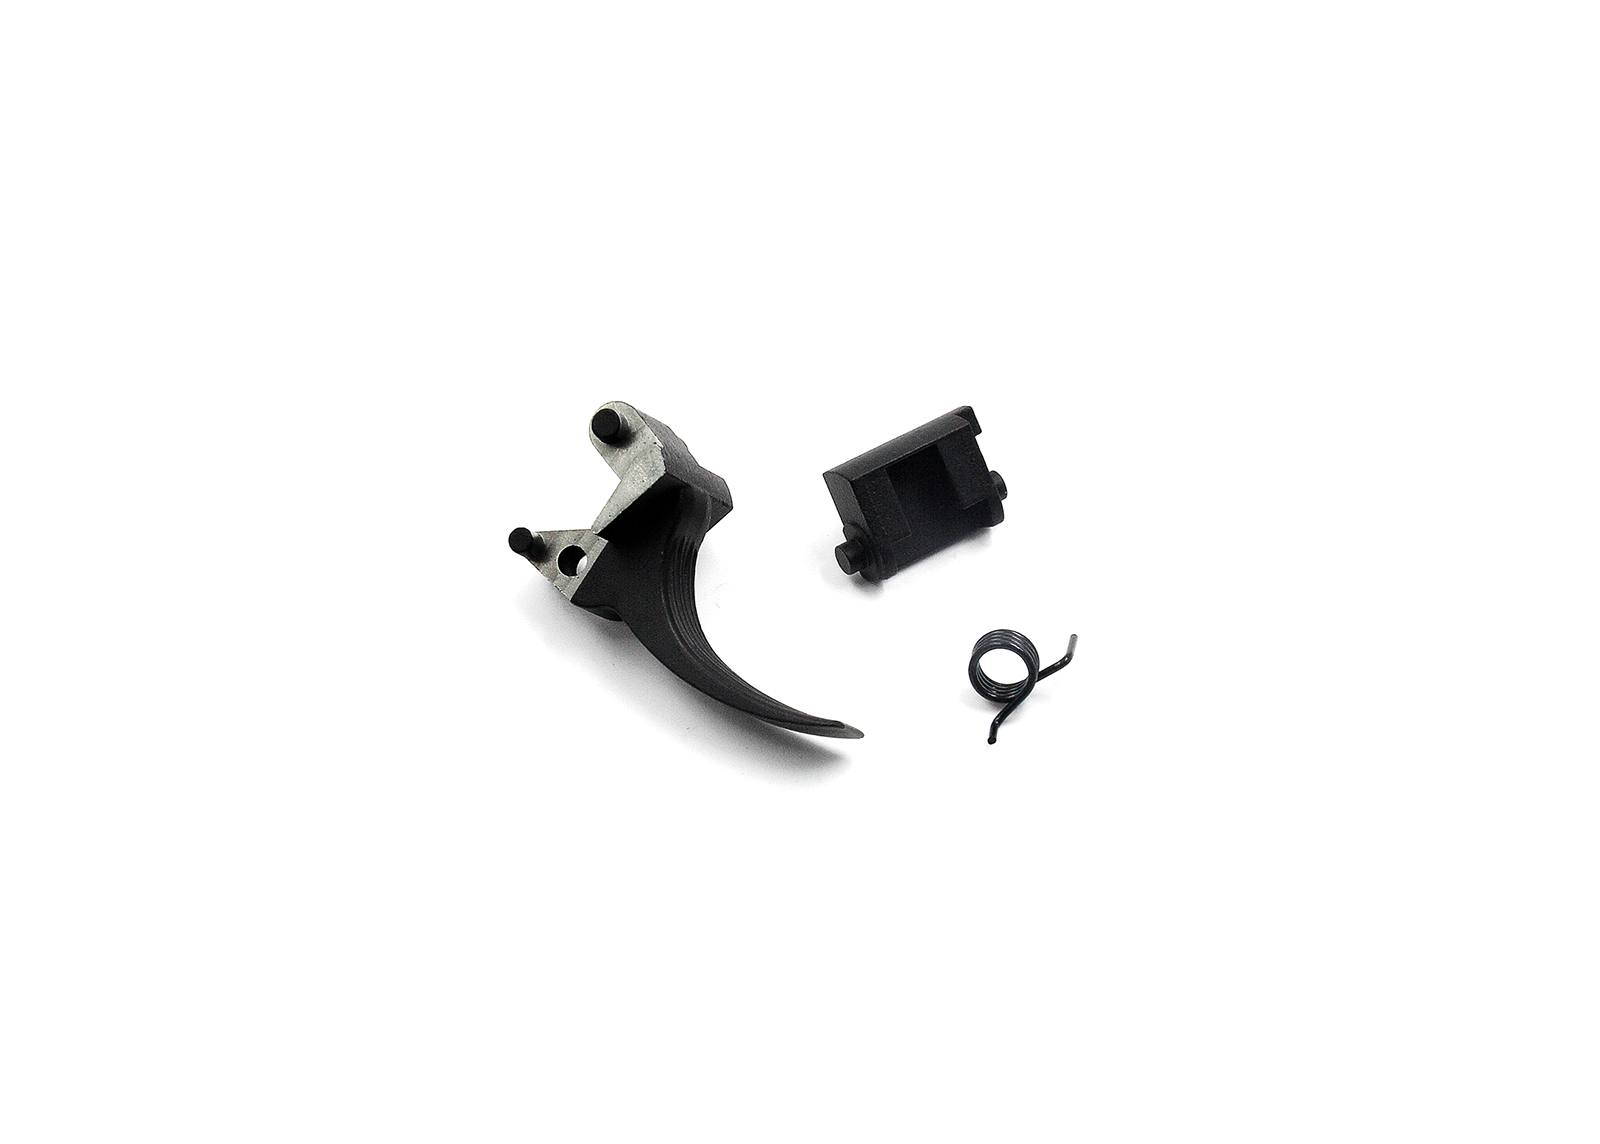 Precision Trigger for AK series - Modify Airsoft parts